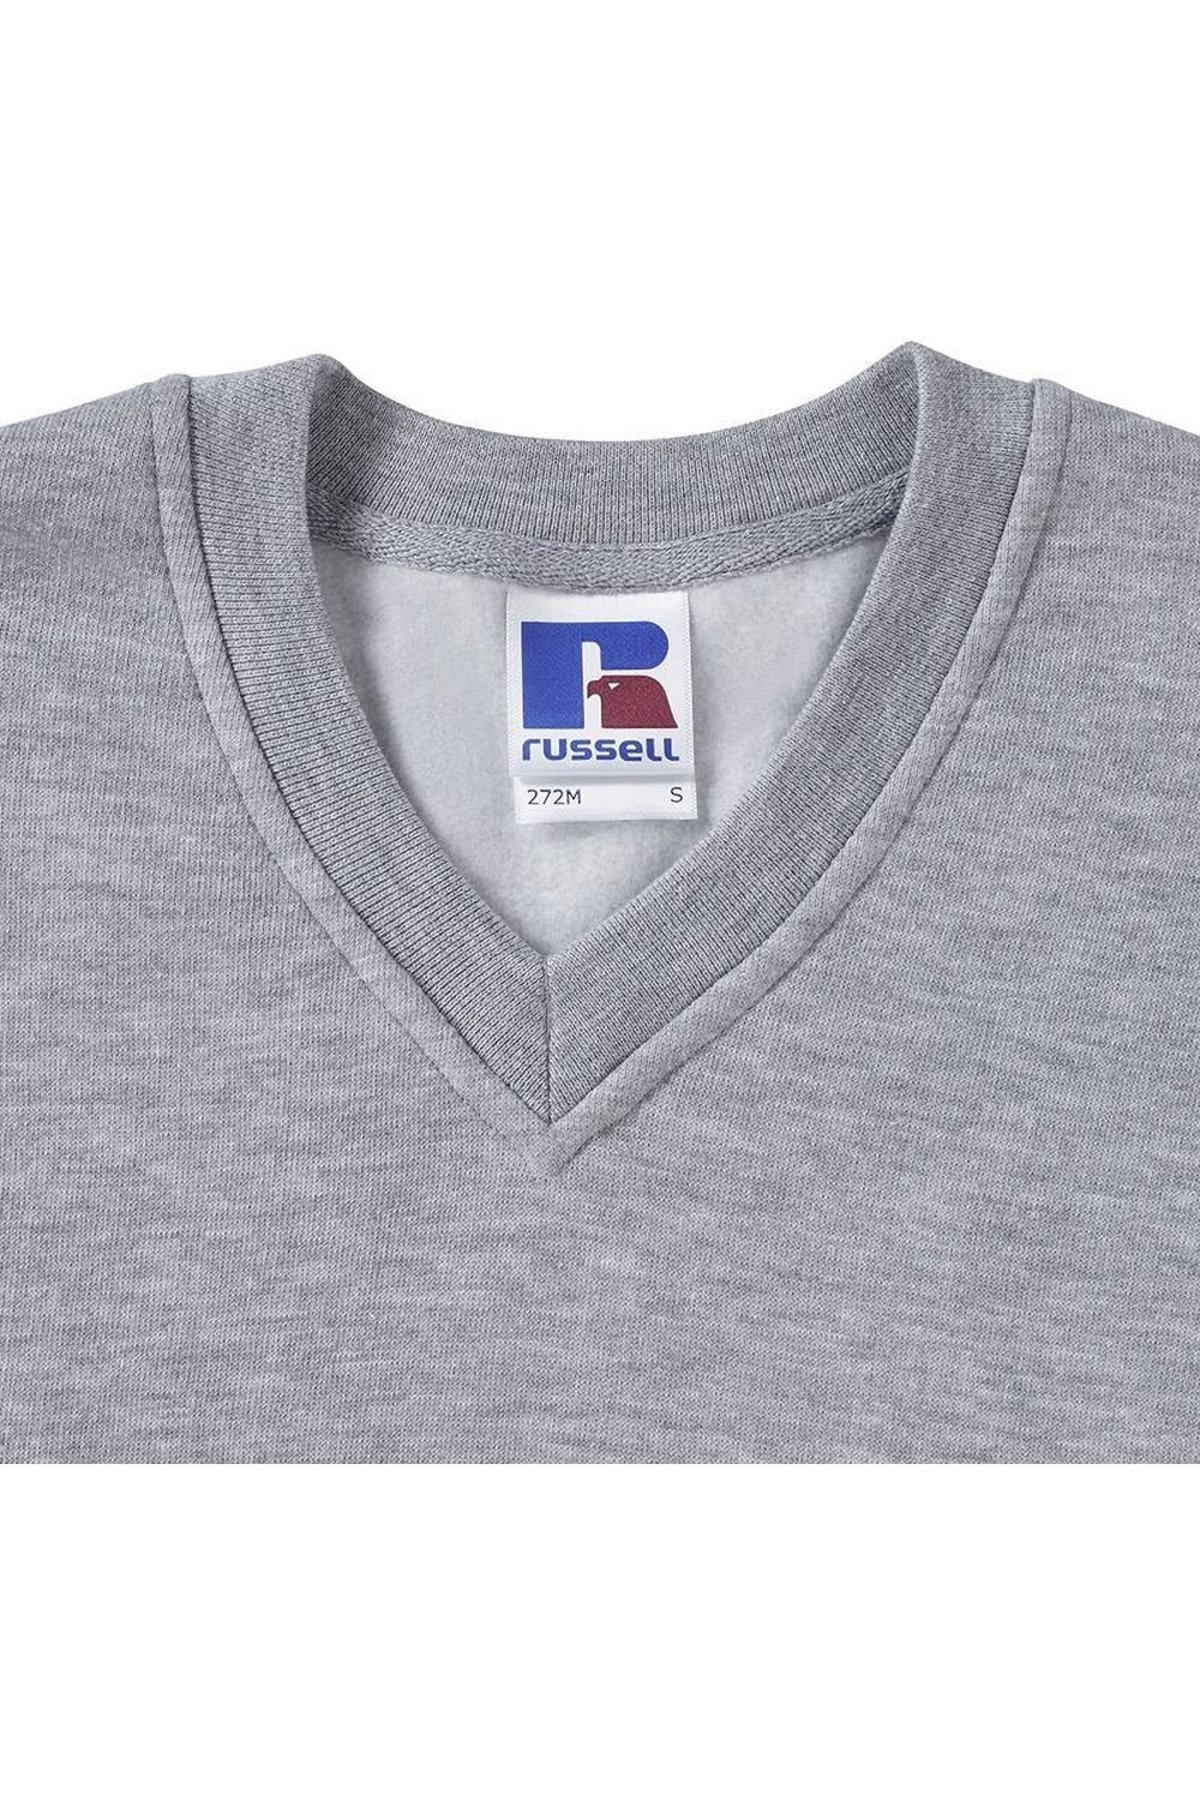 Russell Workwear V-Neck Sweatshirt Top 